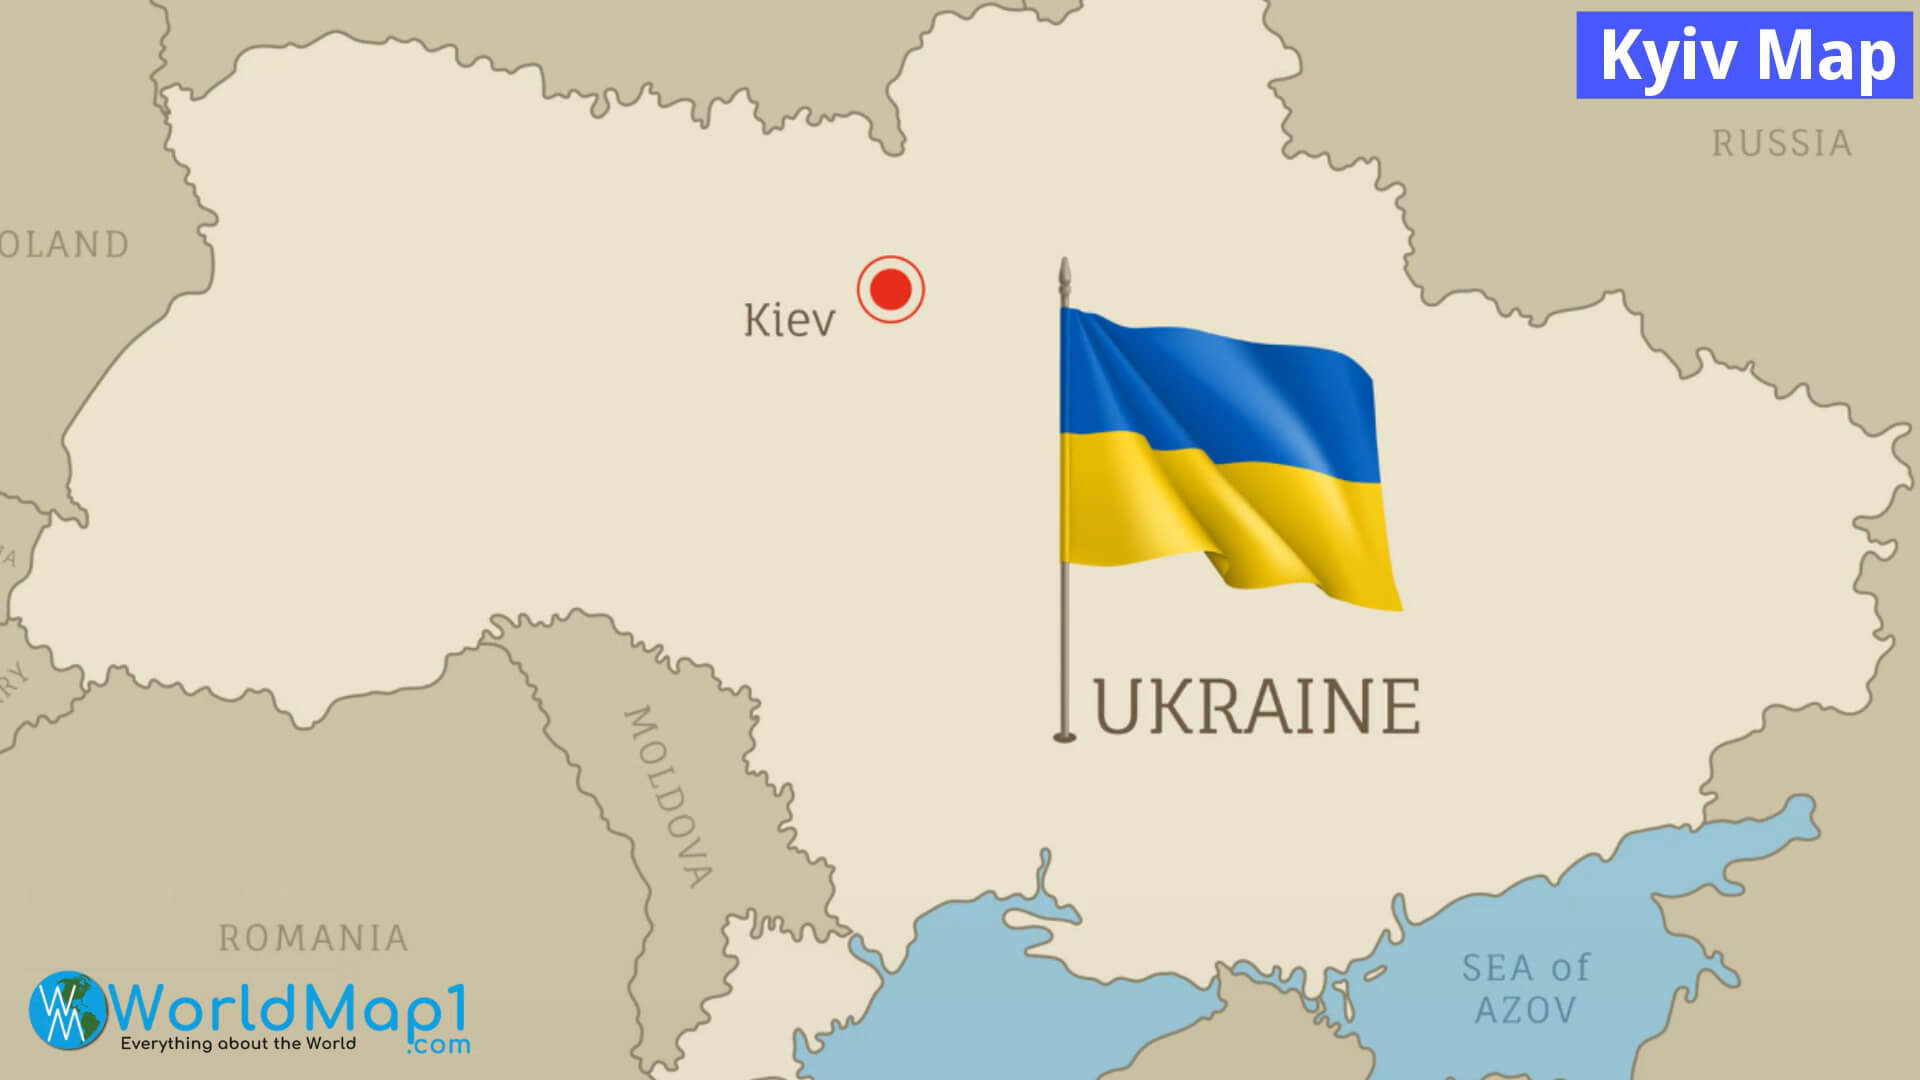 Where is located Kyiv in Ukraine